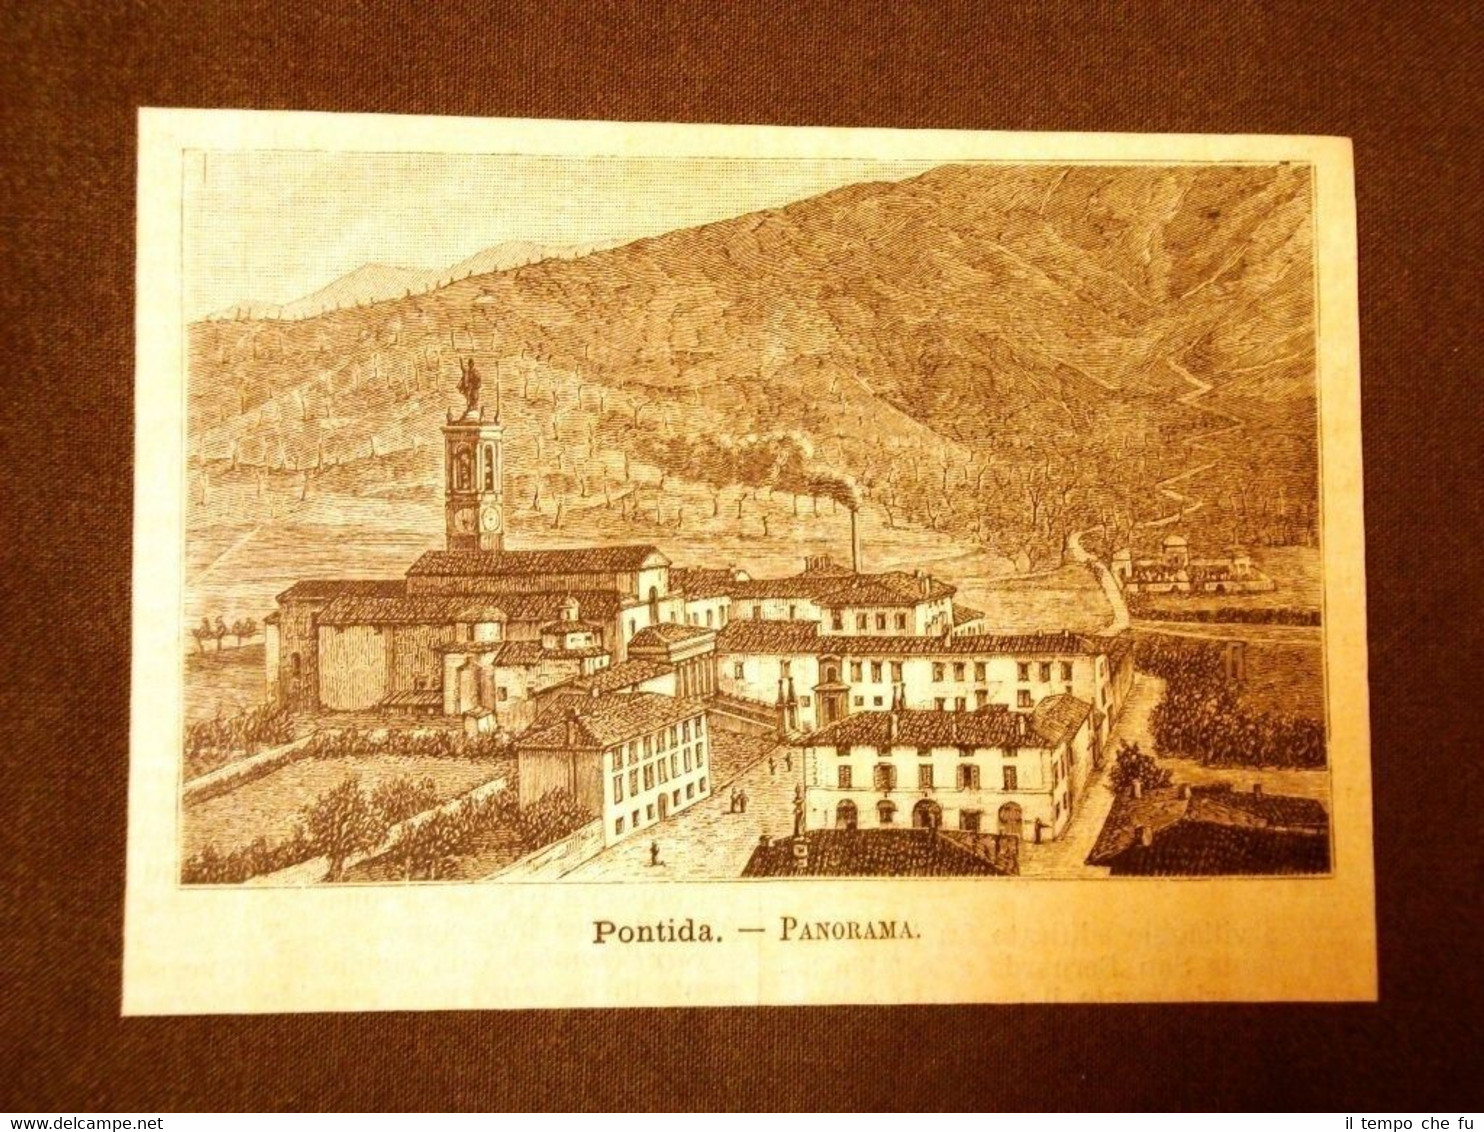 Incisione del 1891 Pontida, panorama - Lombardia